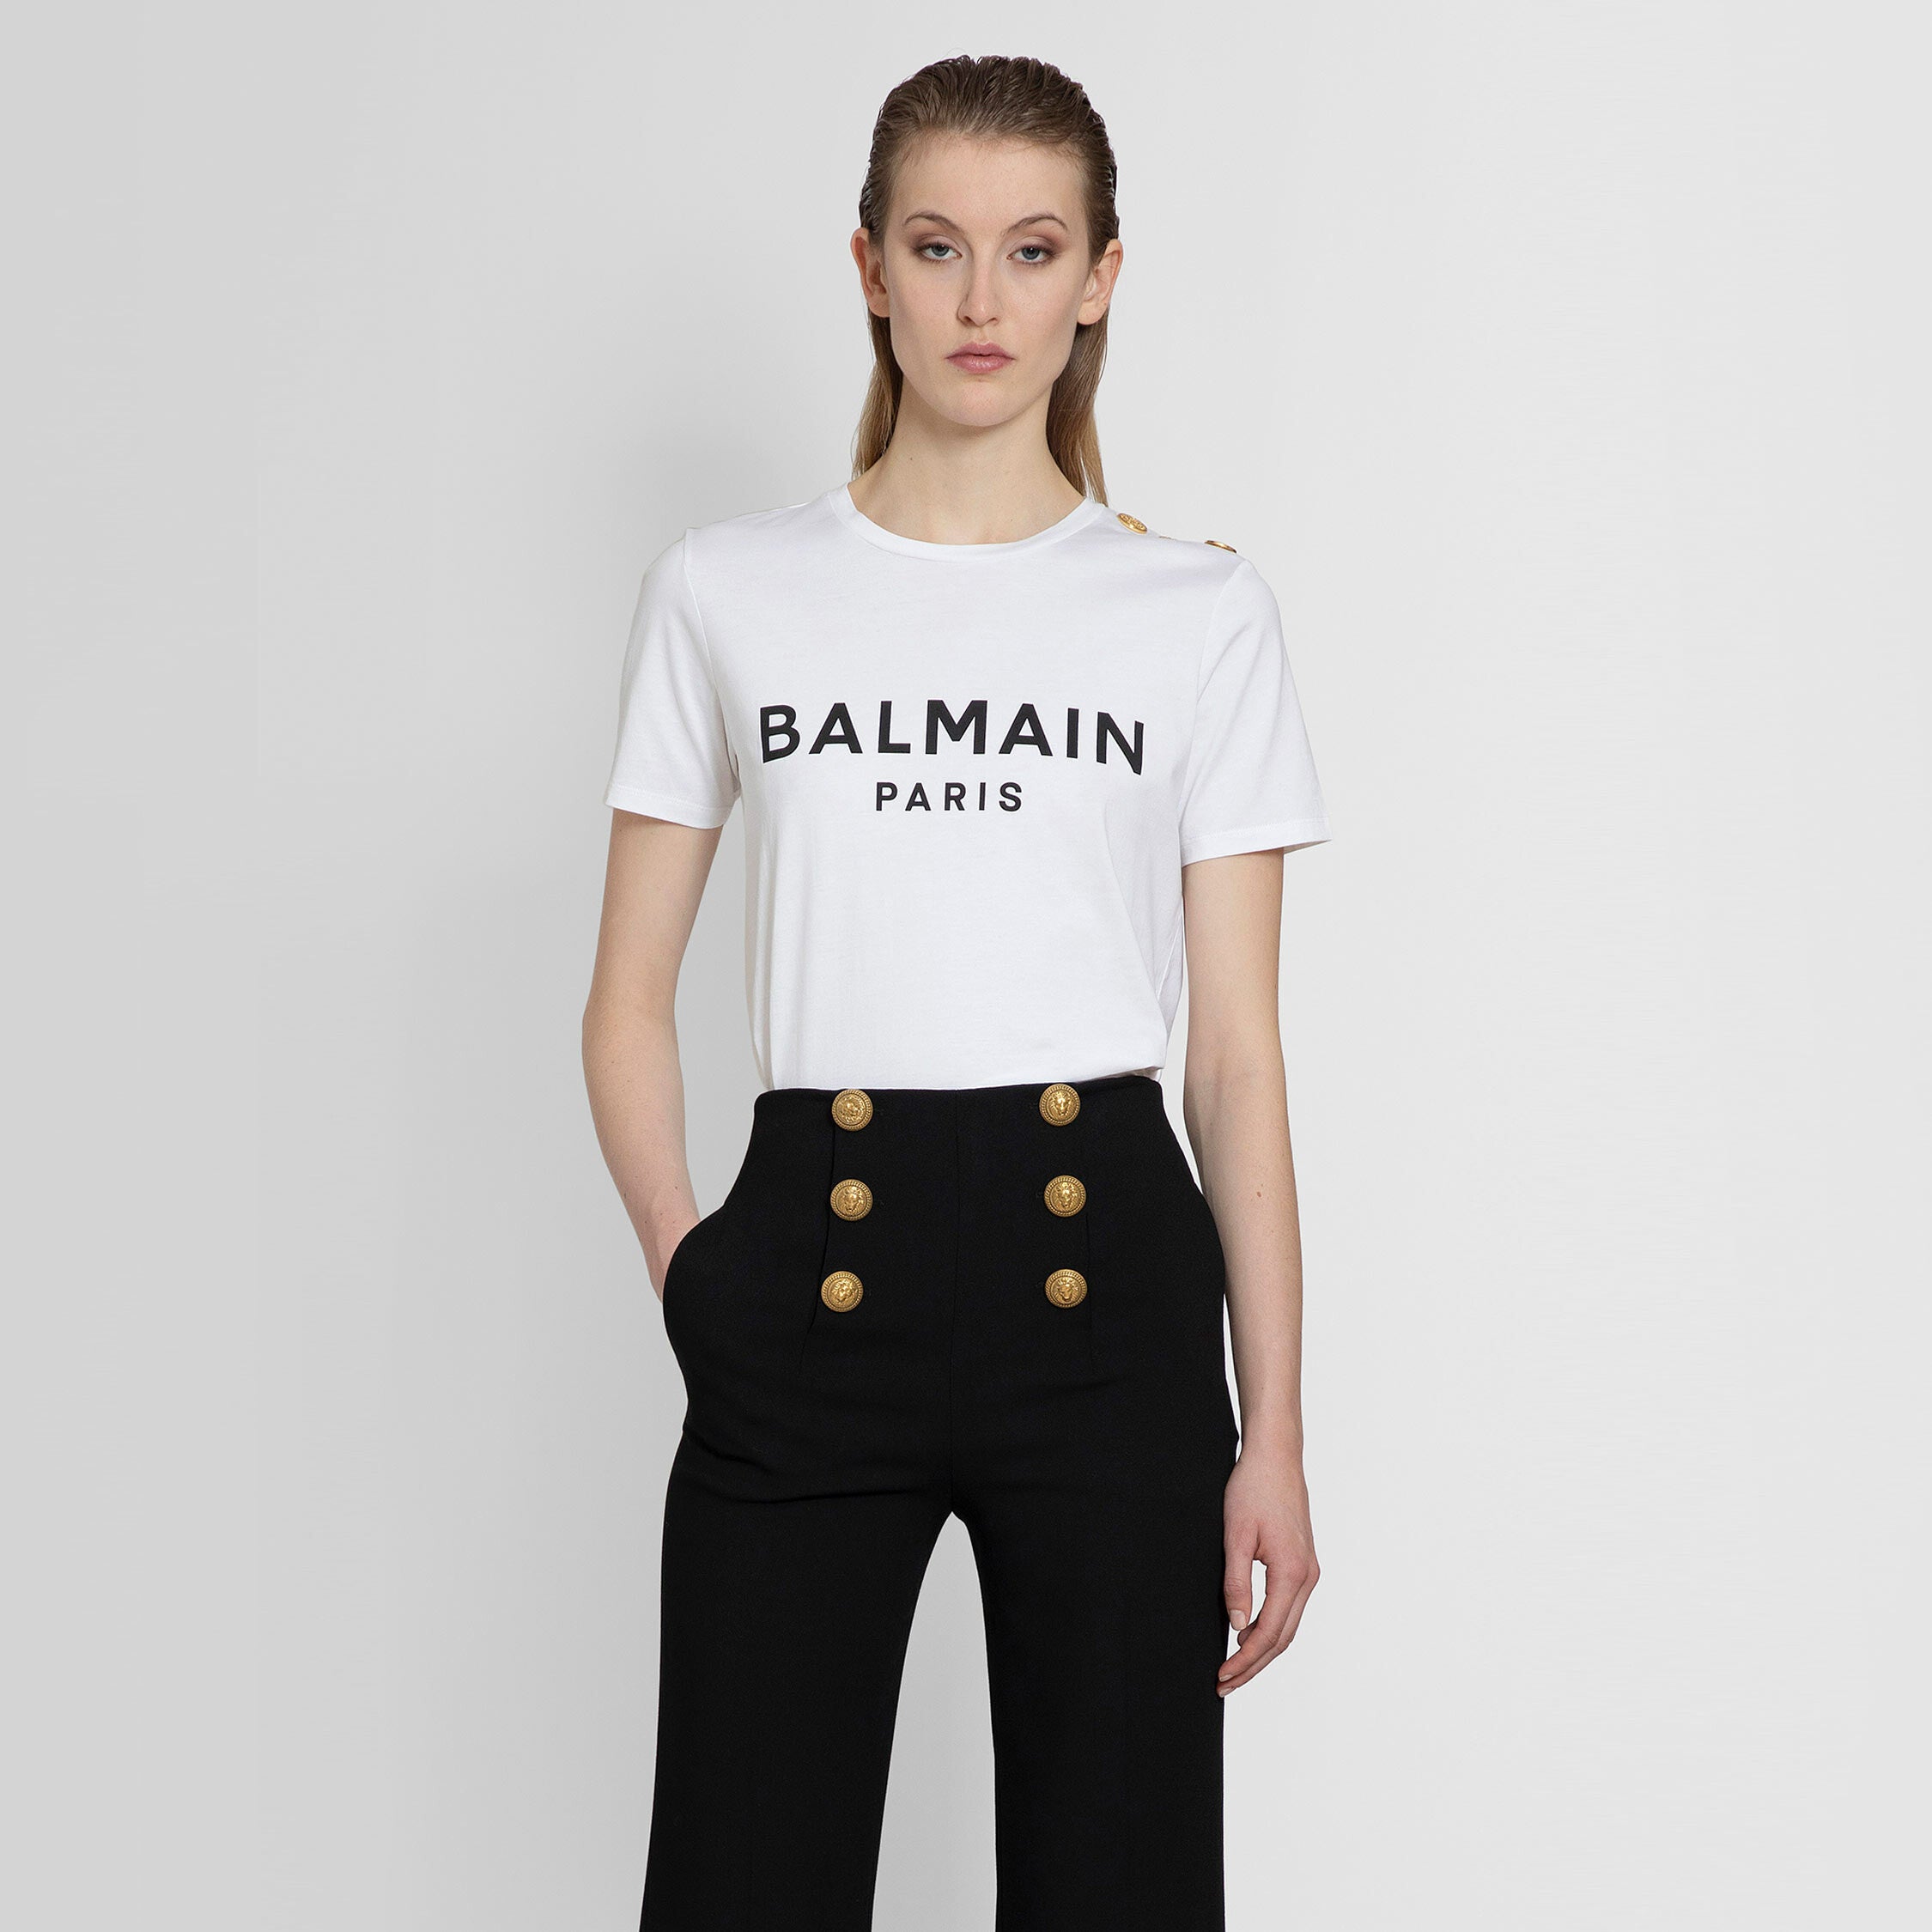 BALMAIN WOMAN T-SHIRTS - BALMAIN - T-SHIRTS | Antonioli